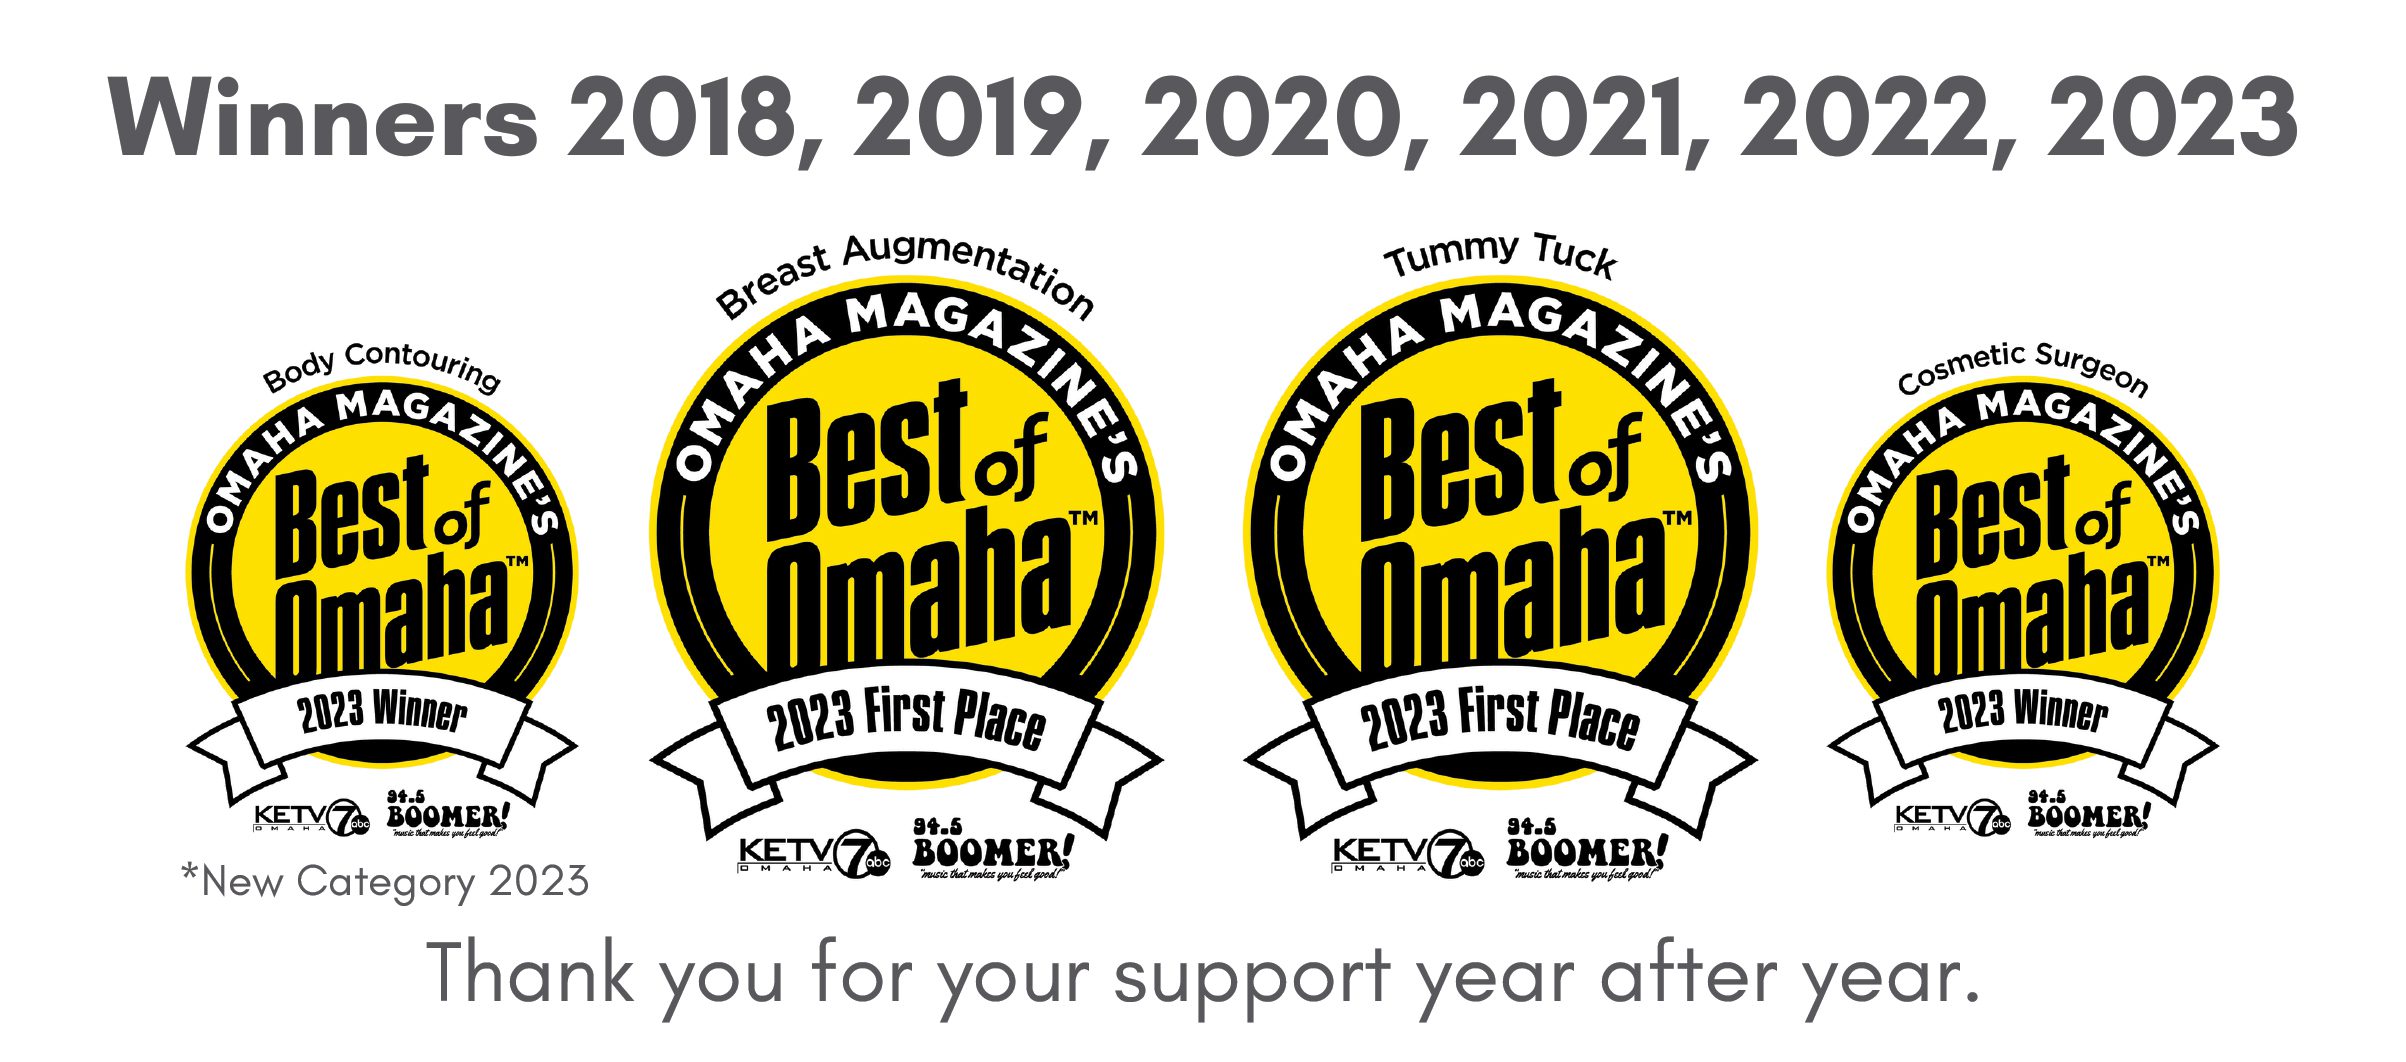 Winners 2018, 2019, 2020, 2021, 2022, 2023 Best of Omaha Logos